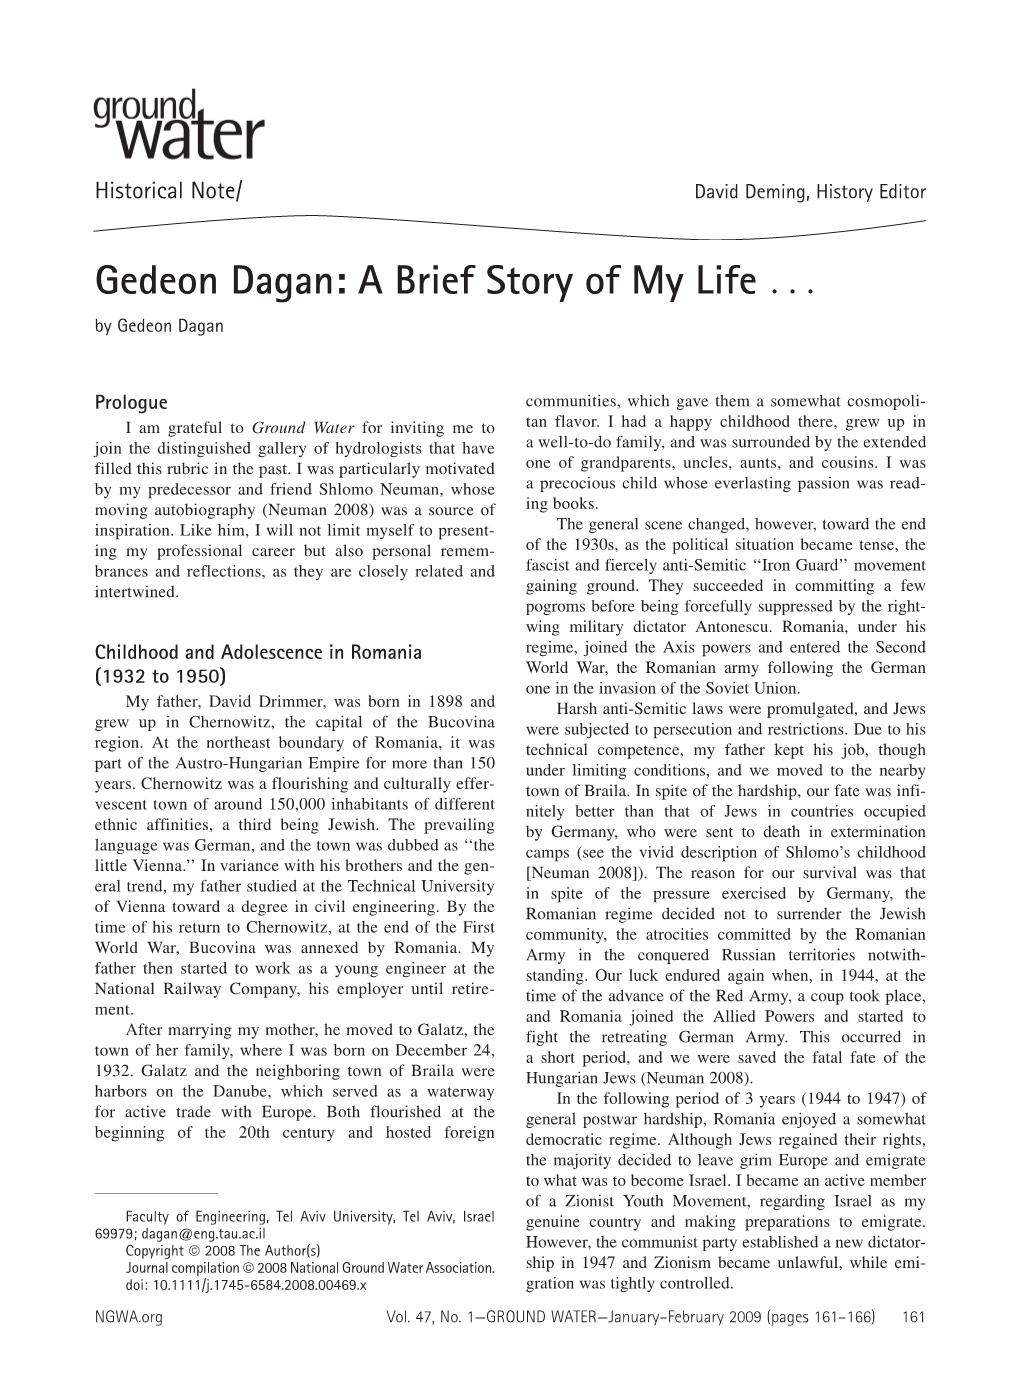 Gedeon Dagan: a Brief Story of My Life